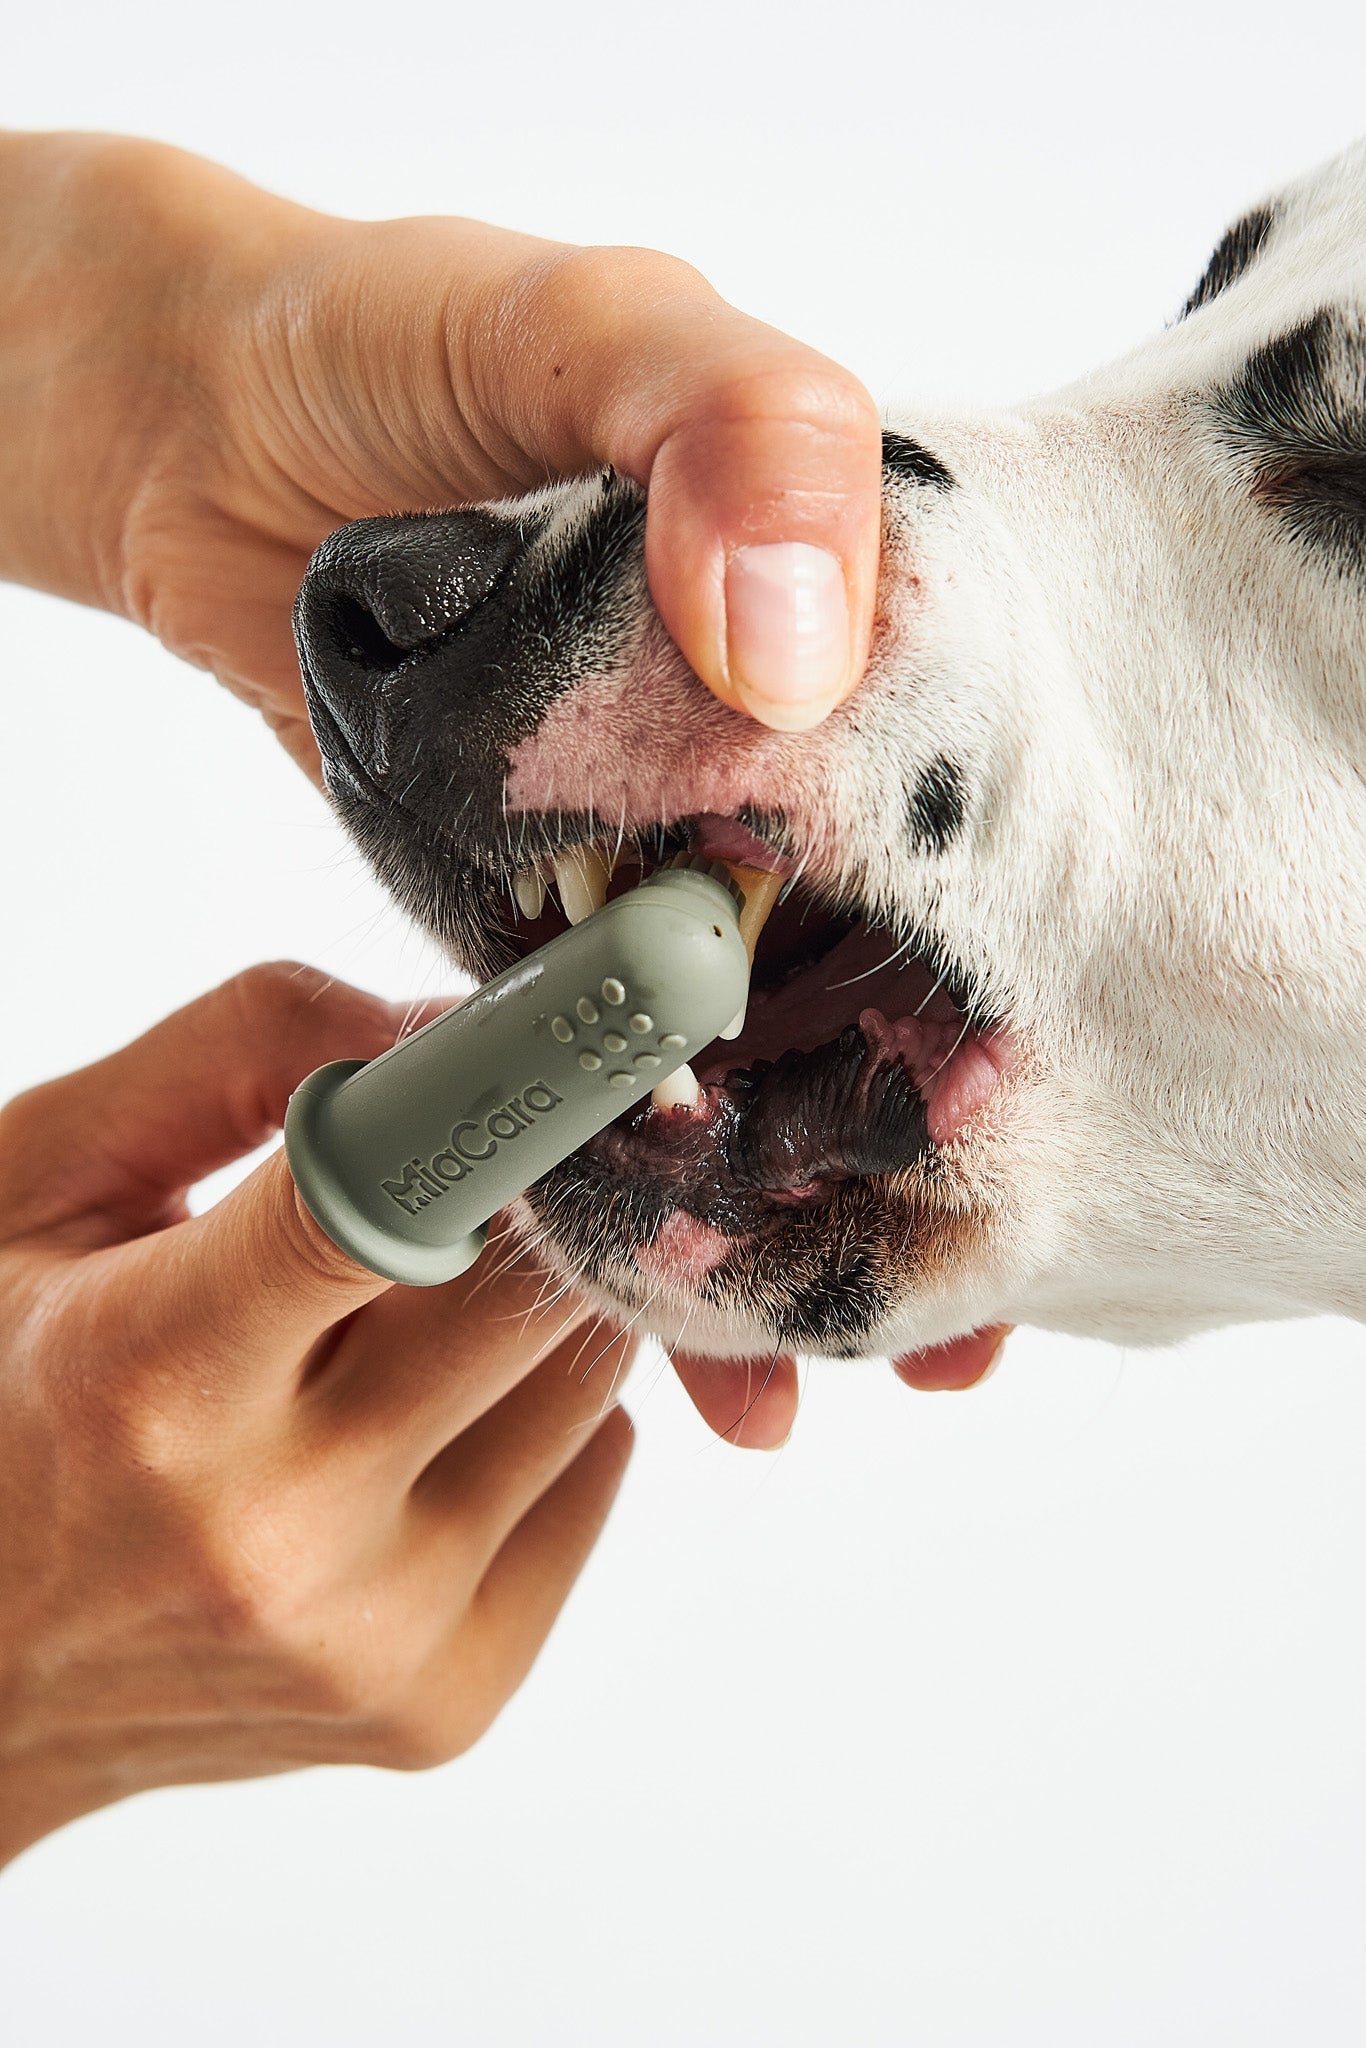 Natural oral care for dogs - Dente gel